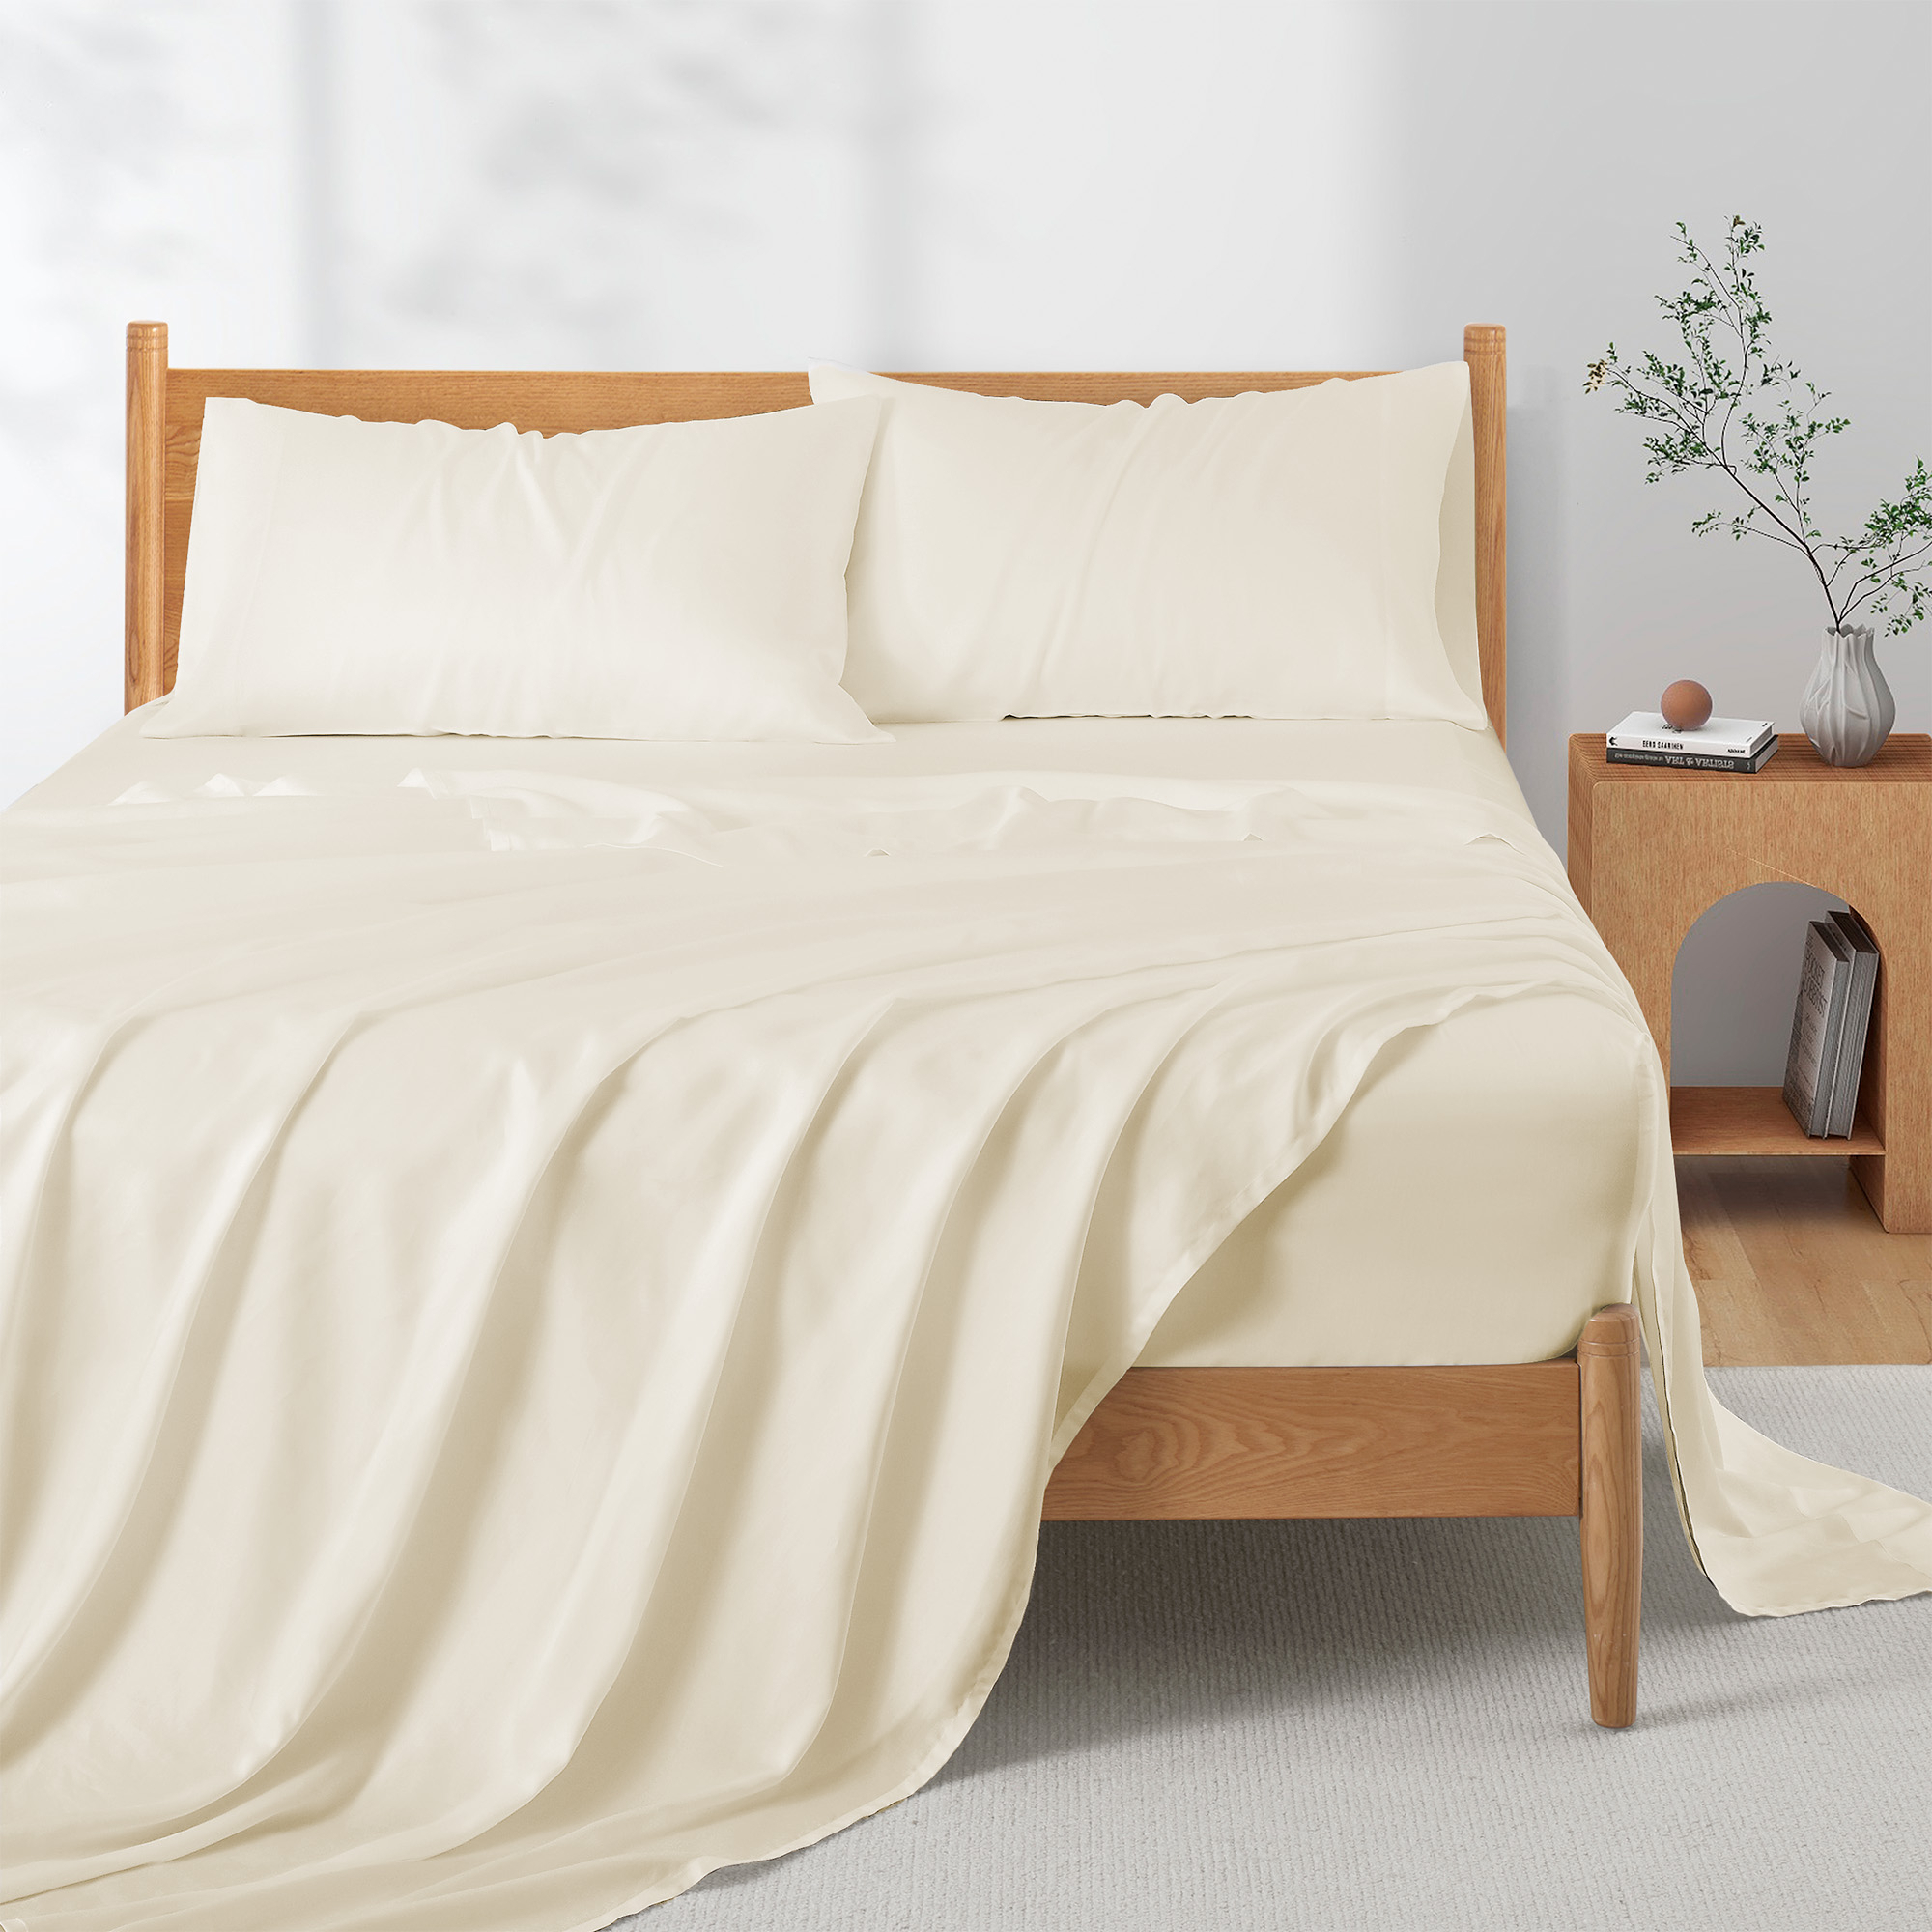 Silky Soft TENCELâ¢ Lyocell Cooling Sheet Set-Breathability And Moisture-wicking Bedding Set - Cannoli Cream, Twin